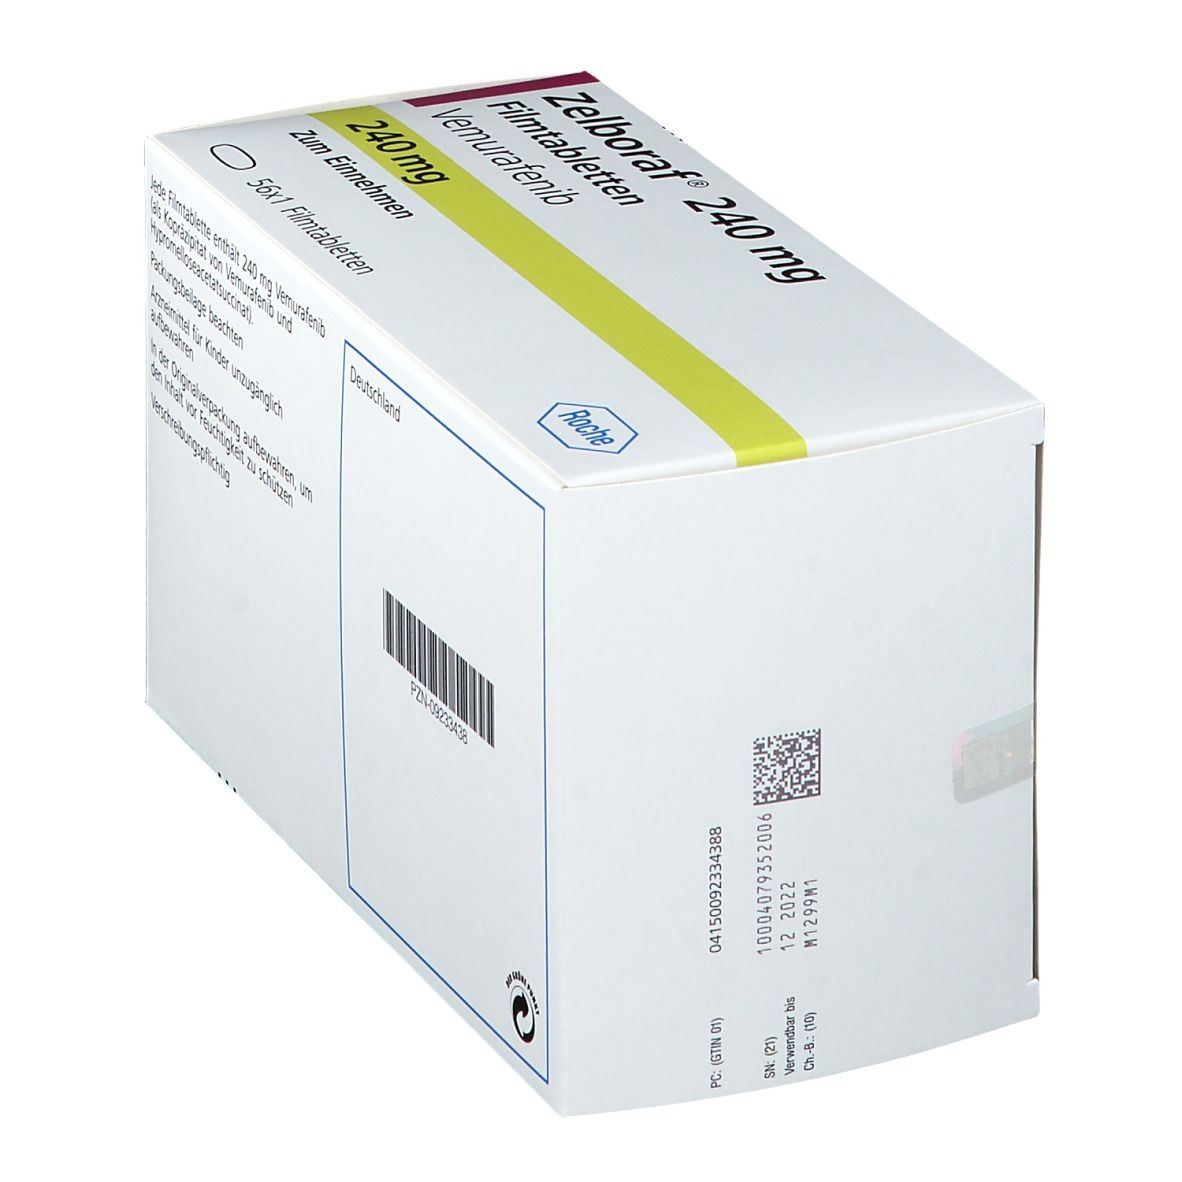 Zelboraf® 240 mg